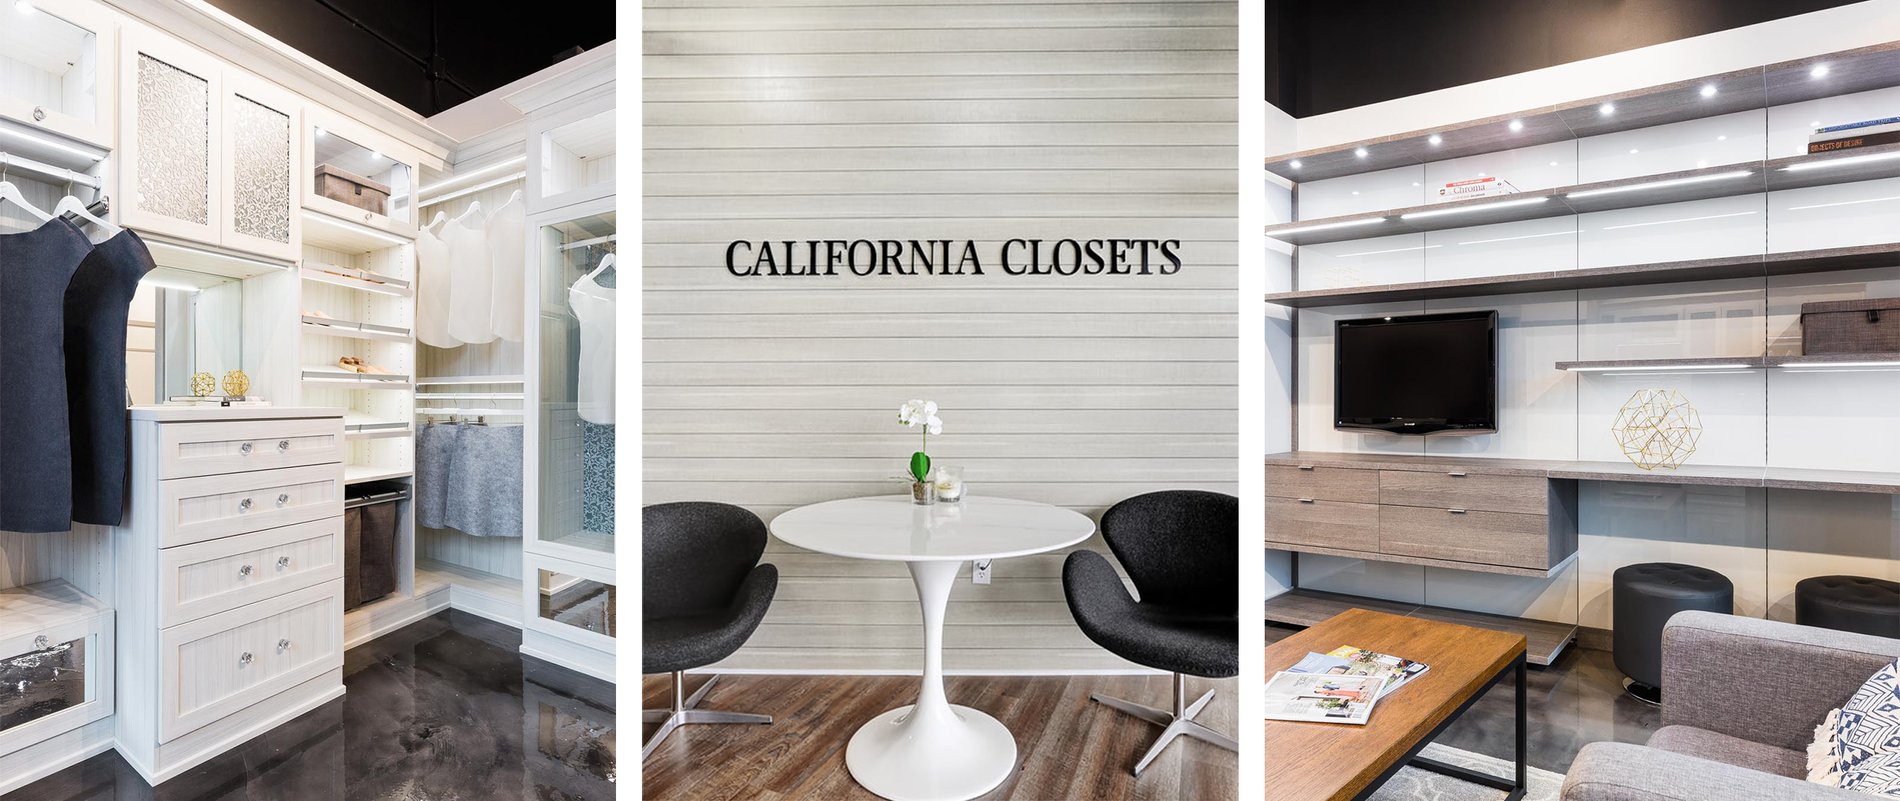 Custom Closets and Closet Systems St. Albert, Alberta - California Closets